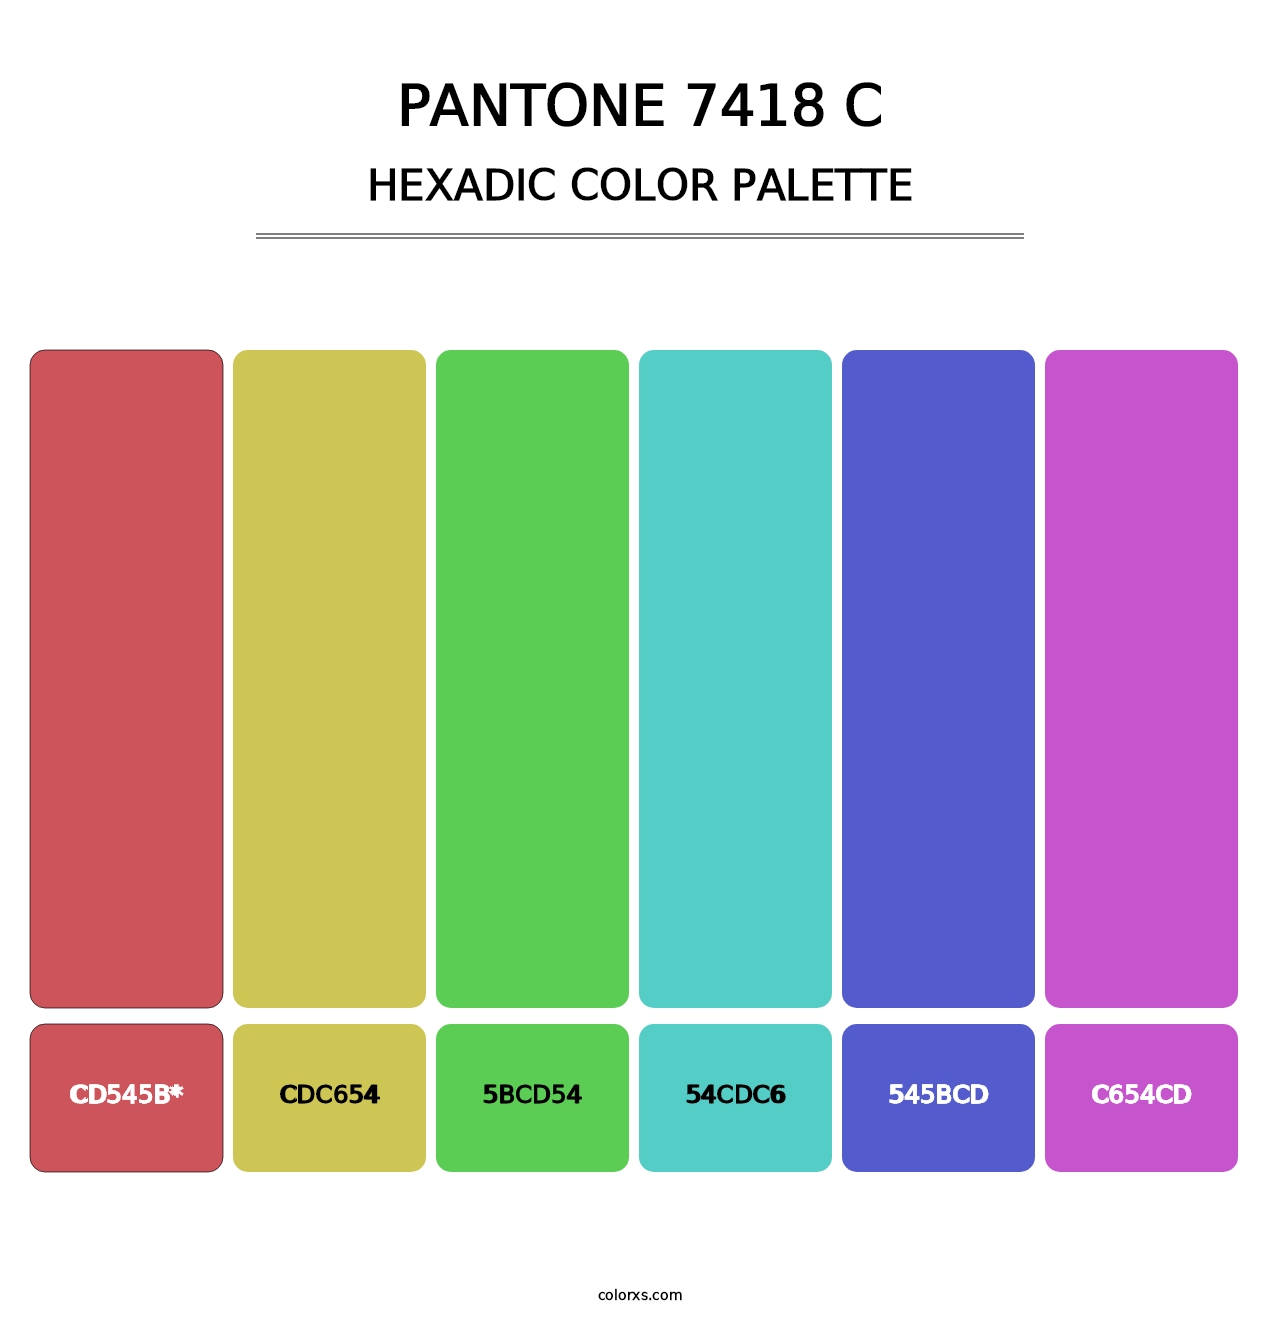 PANTONE 7418 C - Hexadic Color Palette